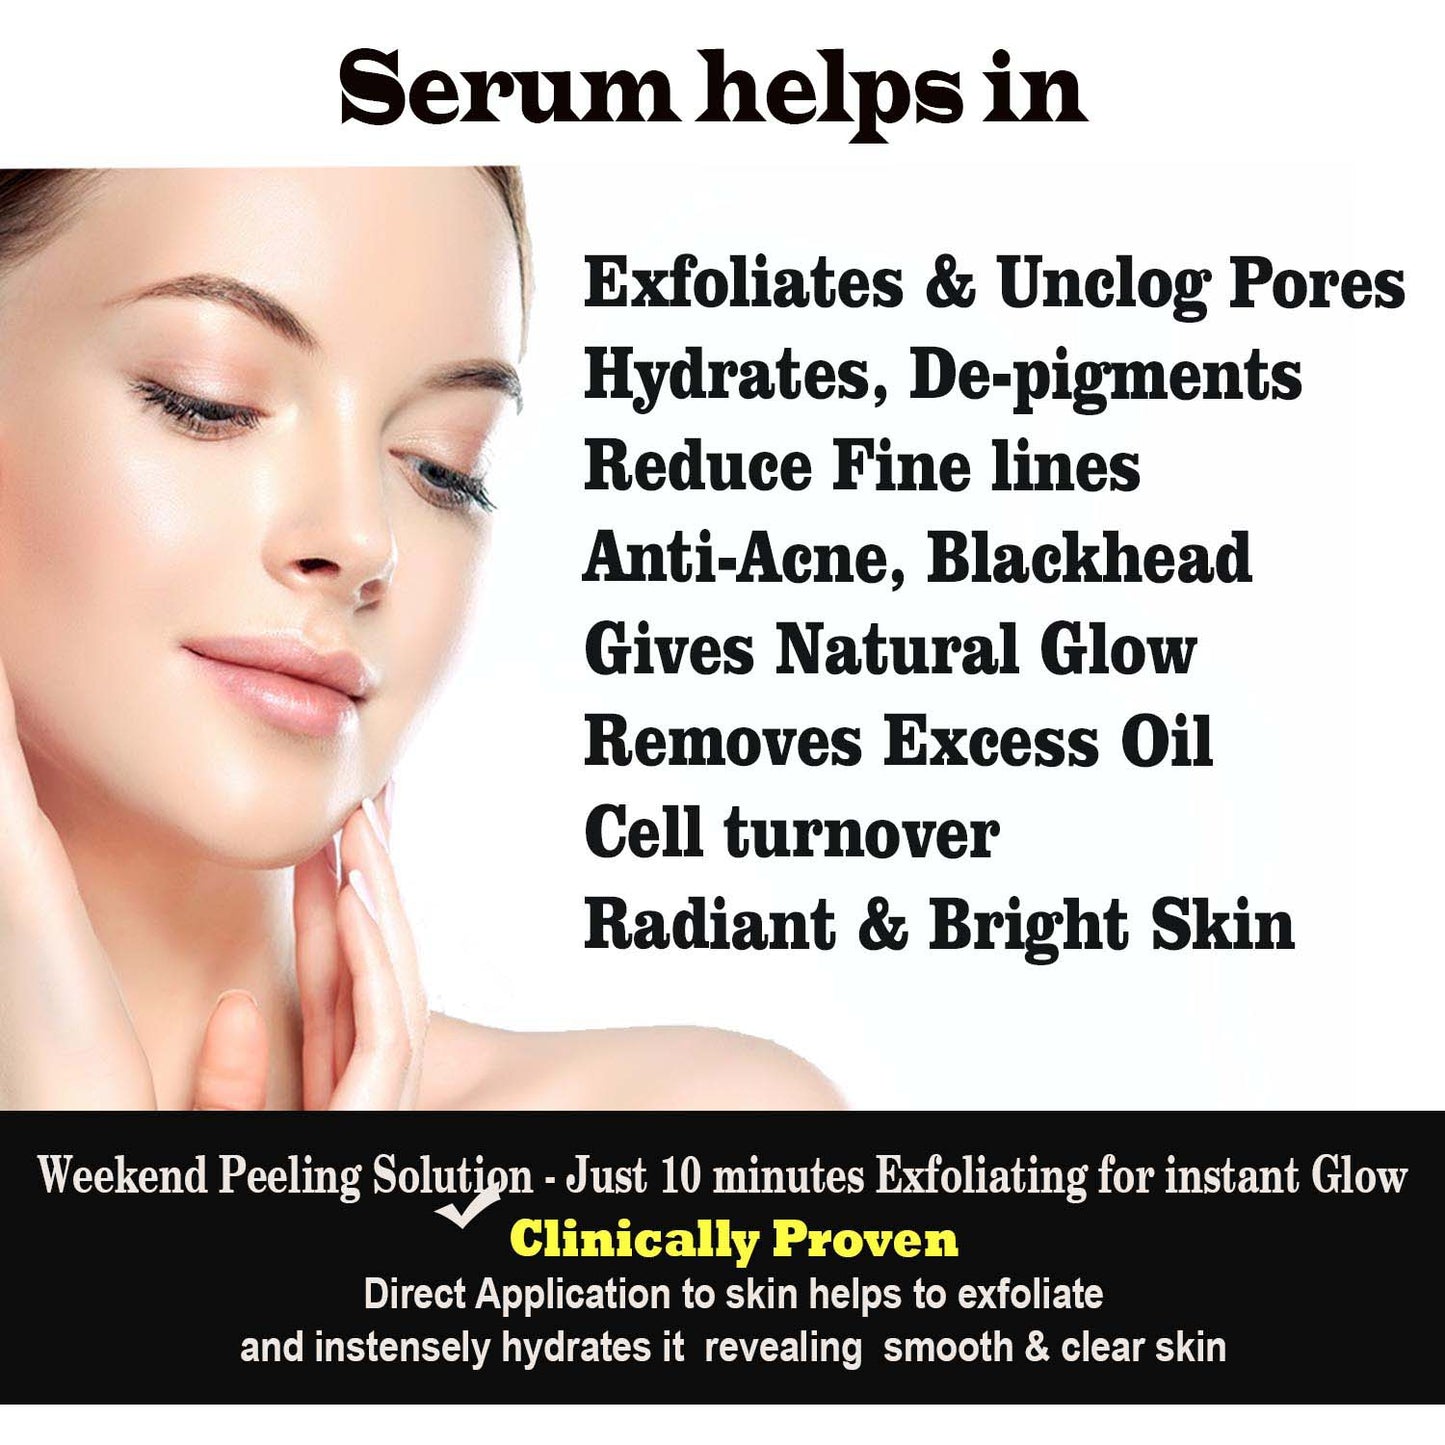 urbaano herbal aha face serum to reduce fine lines, acne, dark spots, excess oil, pigmentation